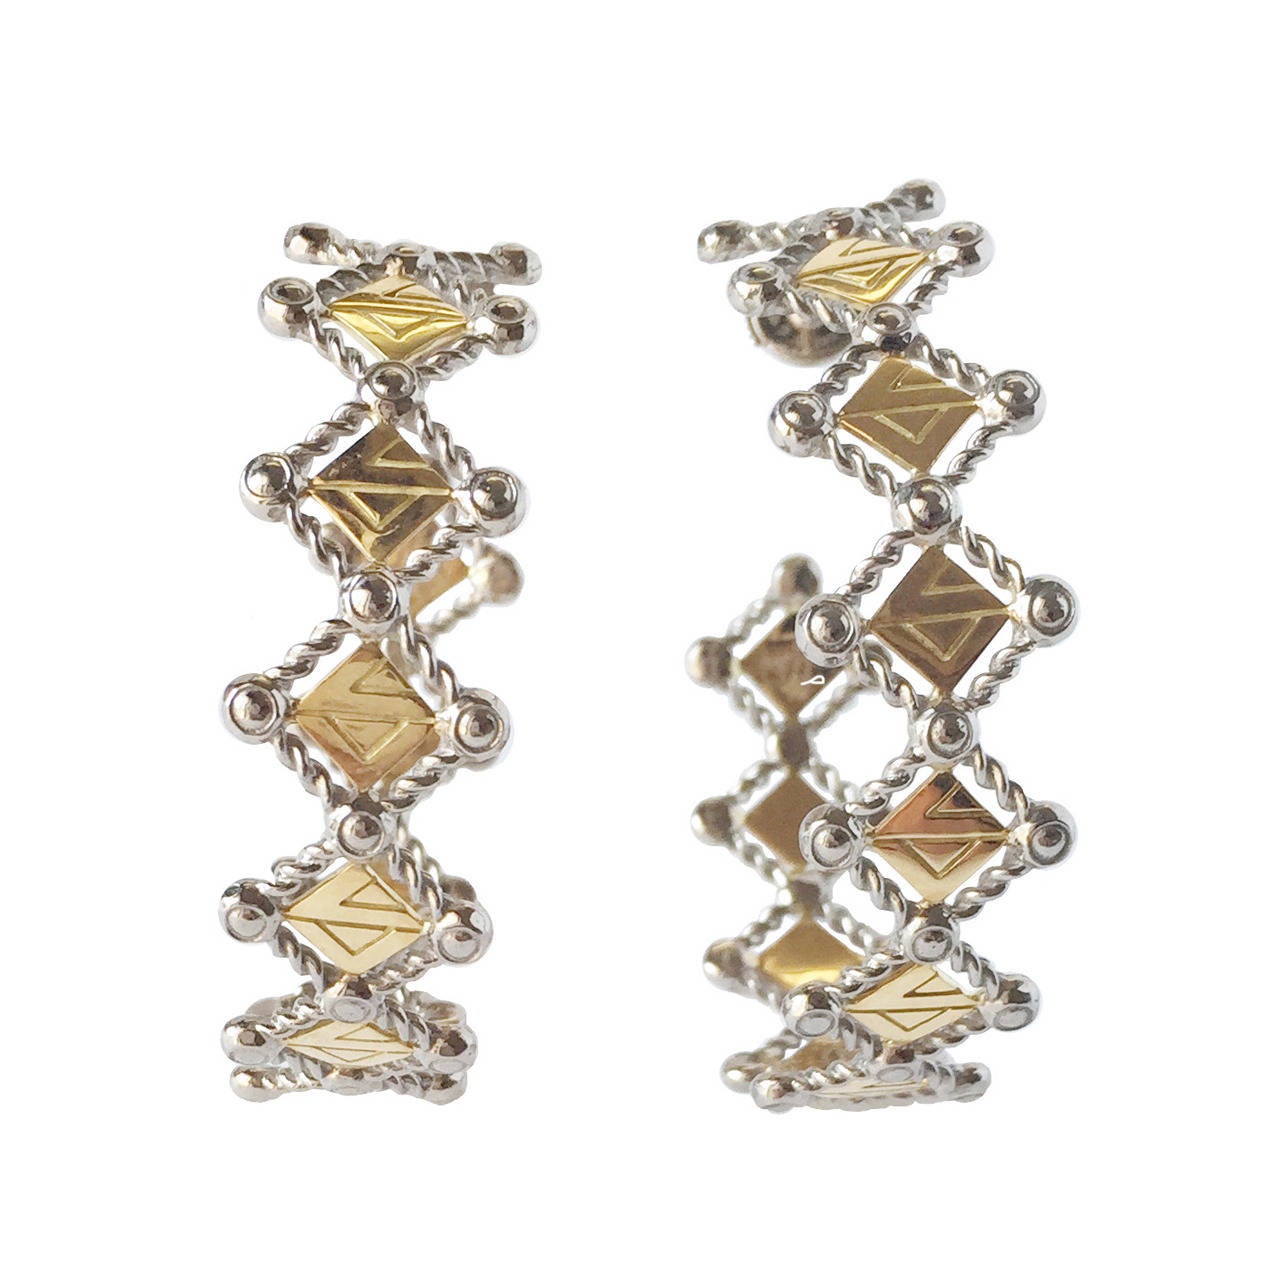 Louis Vuitton Idylle Blossom Hoop Earrings in 18K Rose Gold 0.61 ctw